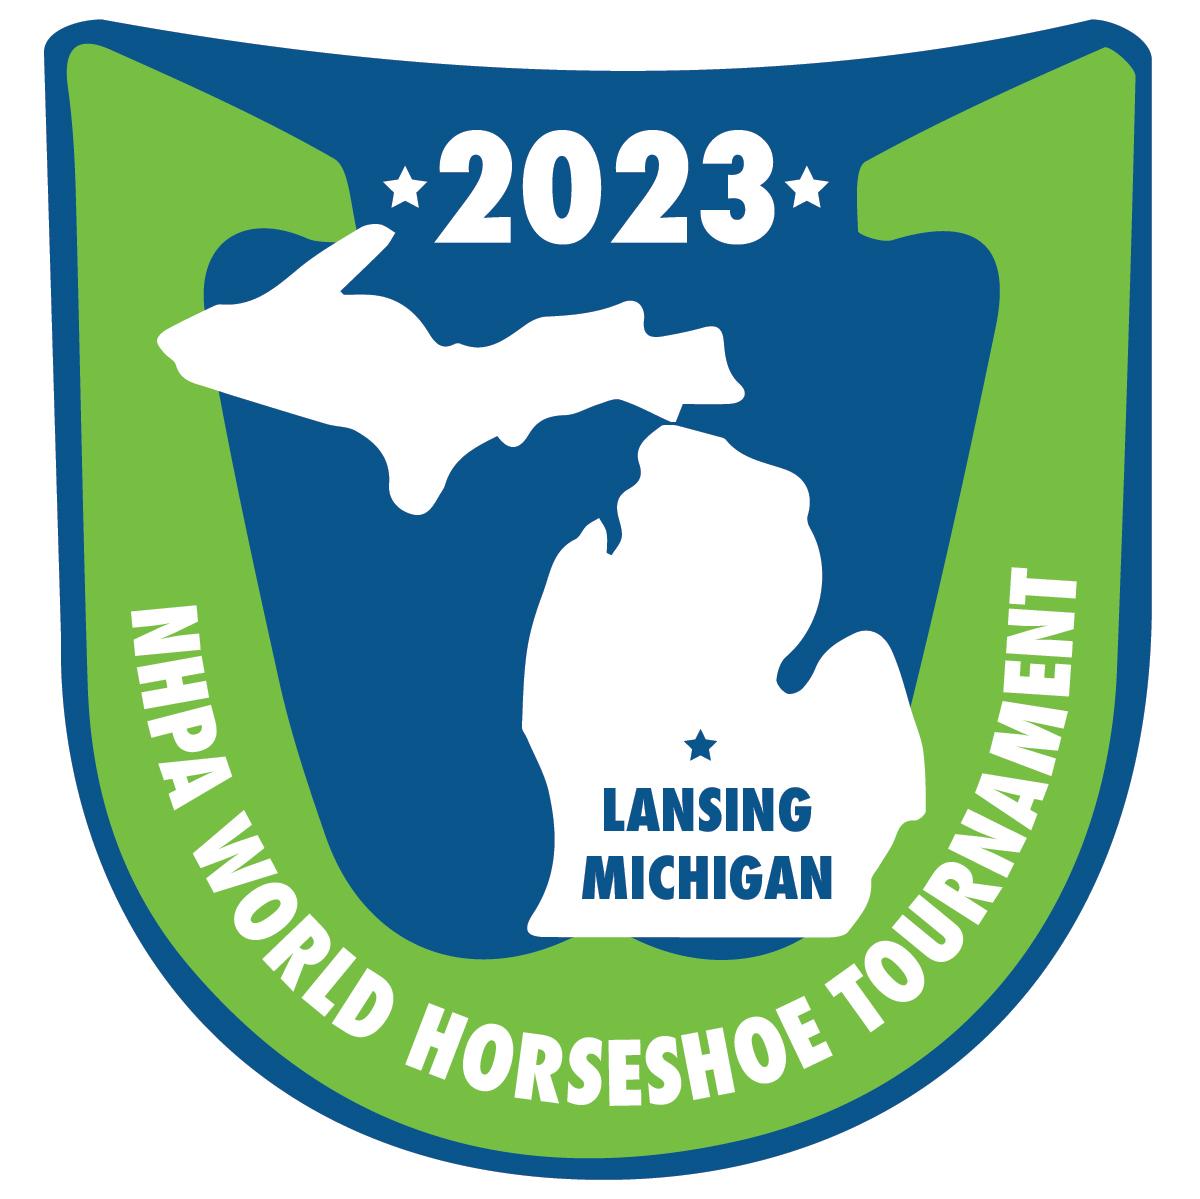 2023 NatPHA World Horseshoe Tournament